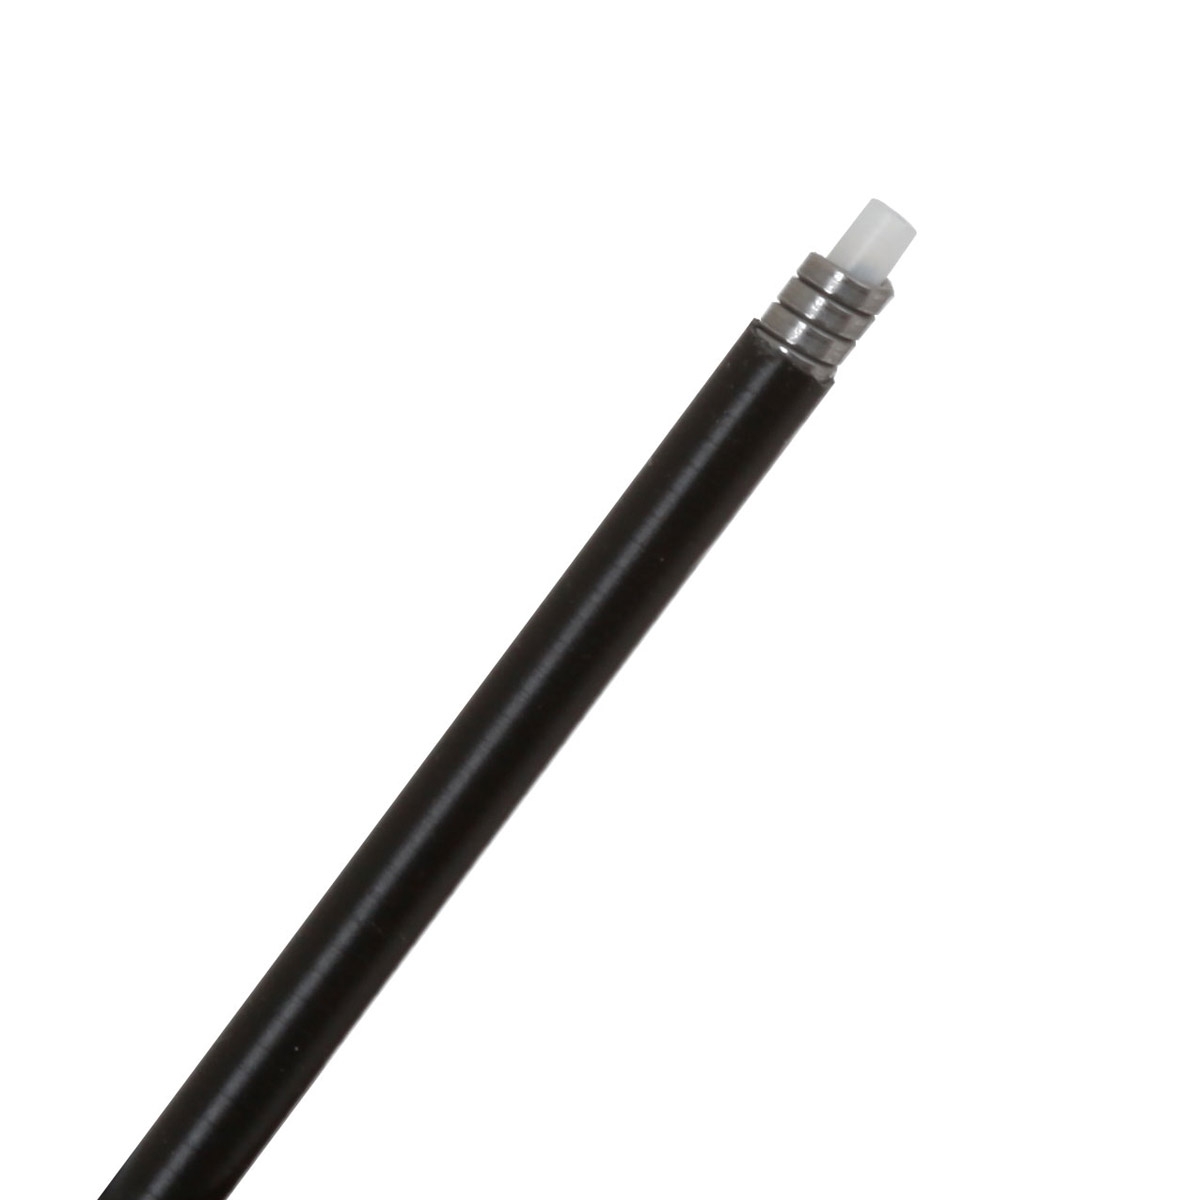 Picture of Brake/Clutch Outer Cable Black Hi-tech teflon